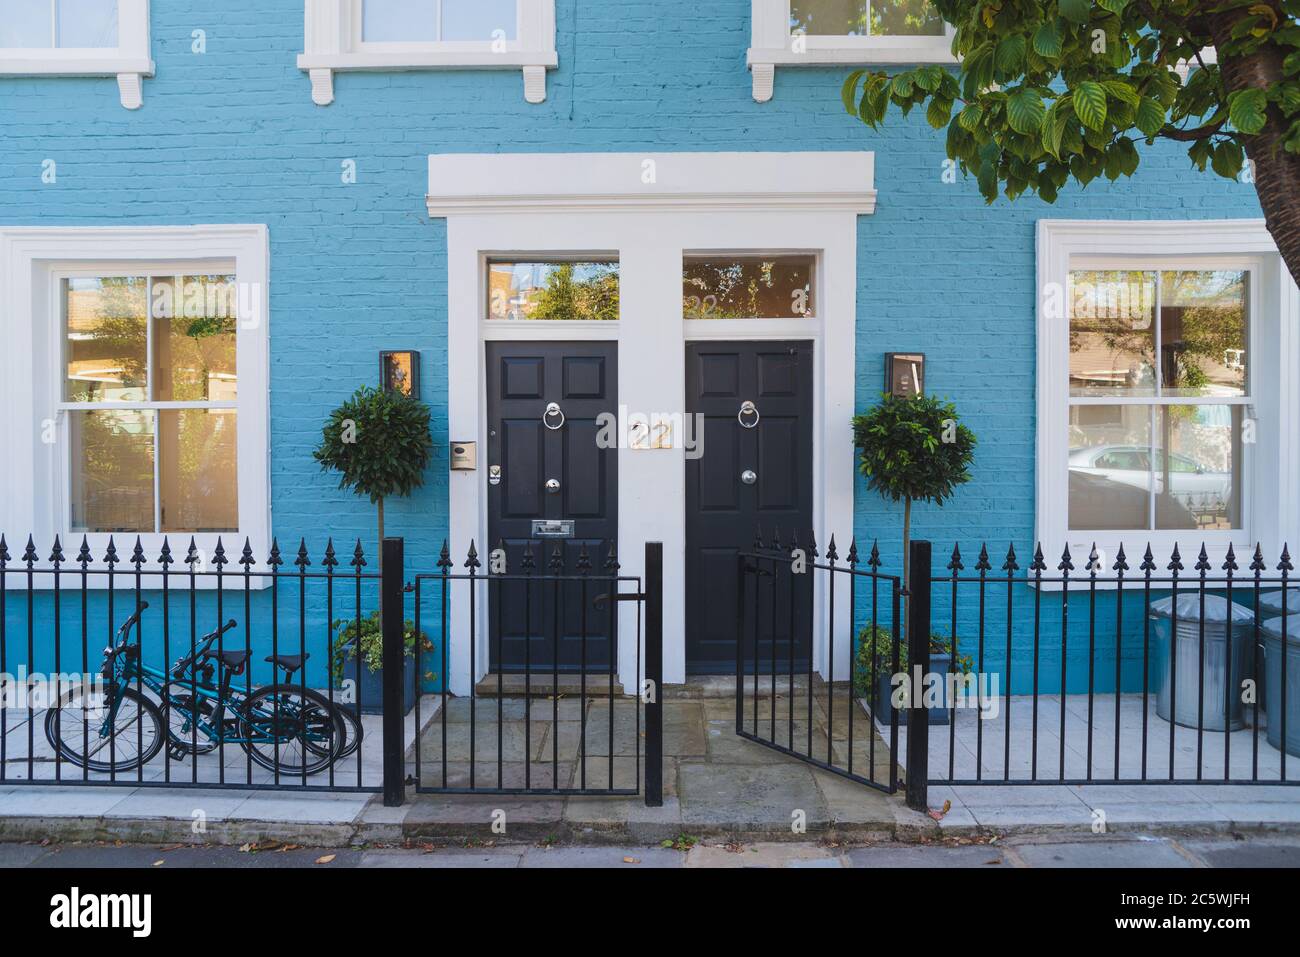 Eingangstür am Eingang façade zum Londoner Mietshaus Haus Stockfoto